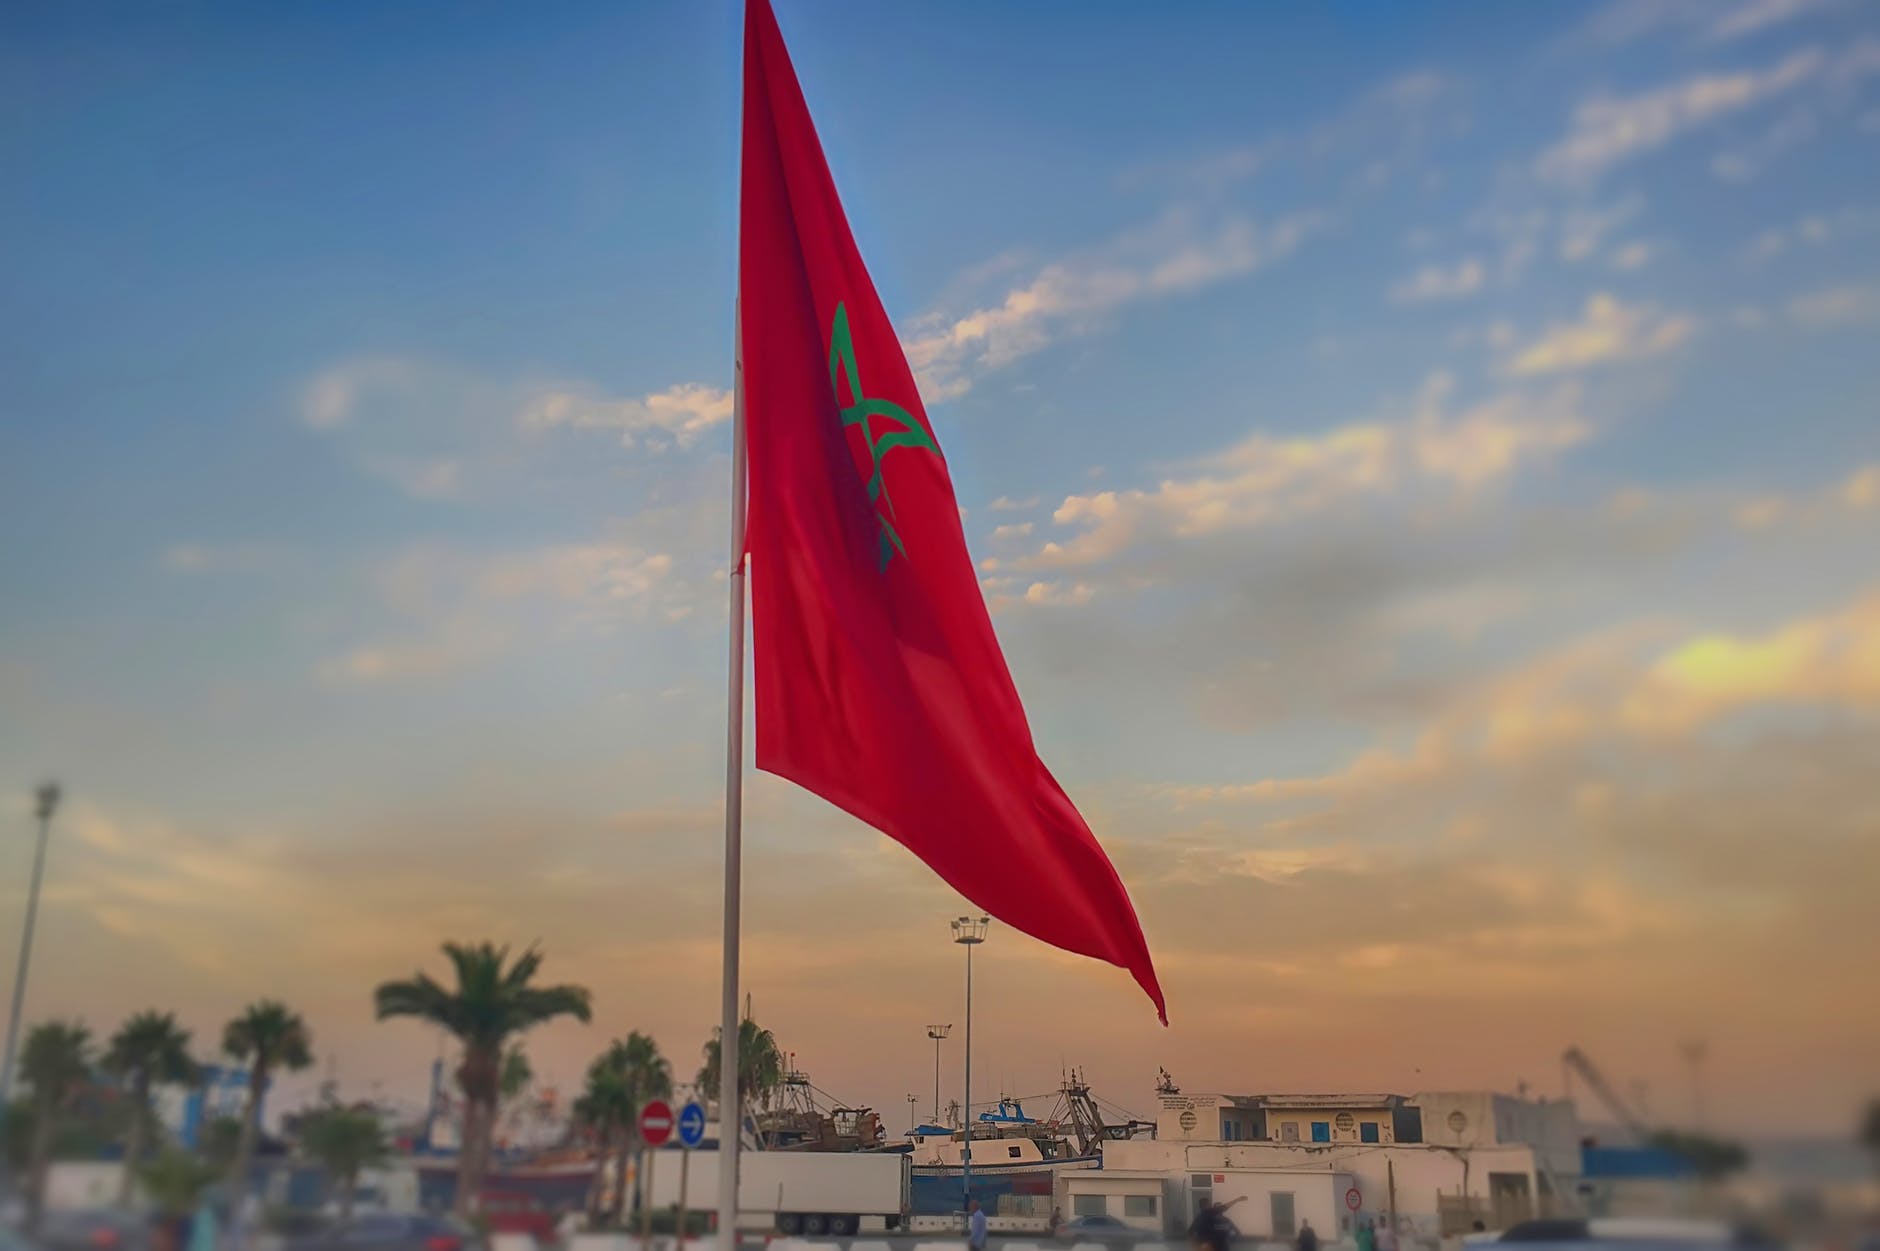 marocco - clima - sahara occidentale - maroc - sahara - اتفاق مصري - المغرب - couverture - marocco unesco -maroc - تعميم - Marrakech